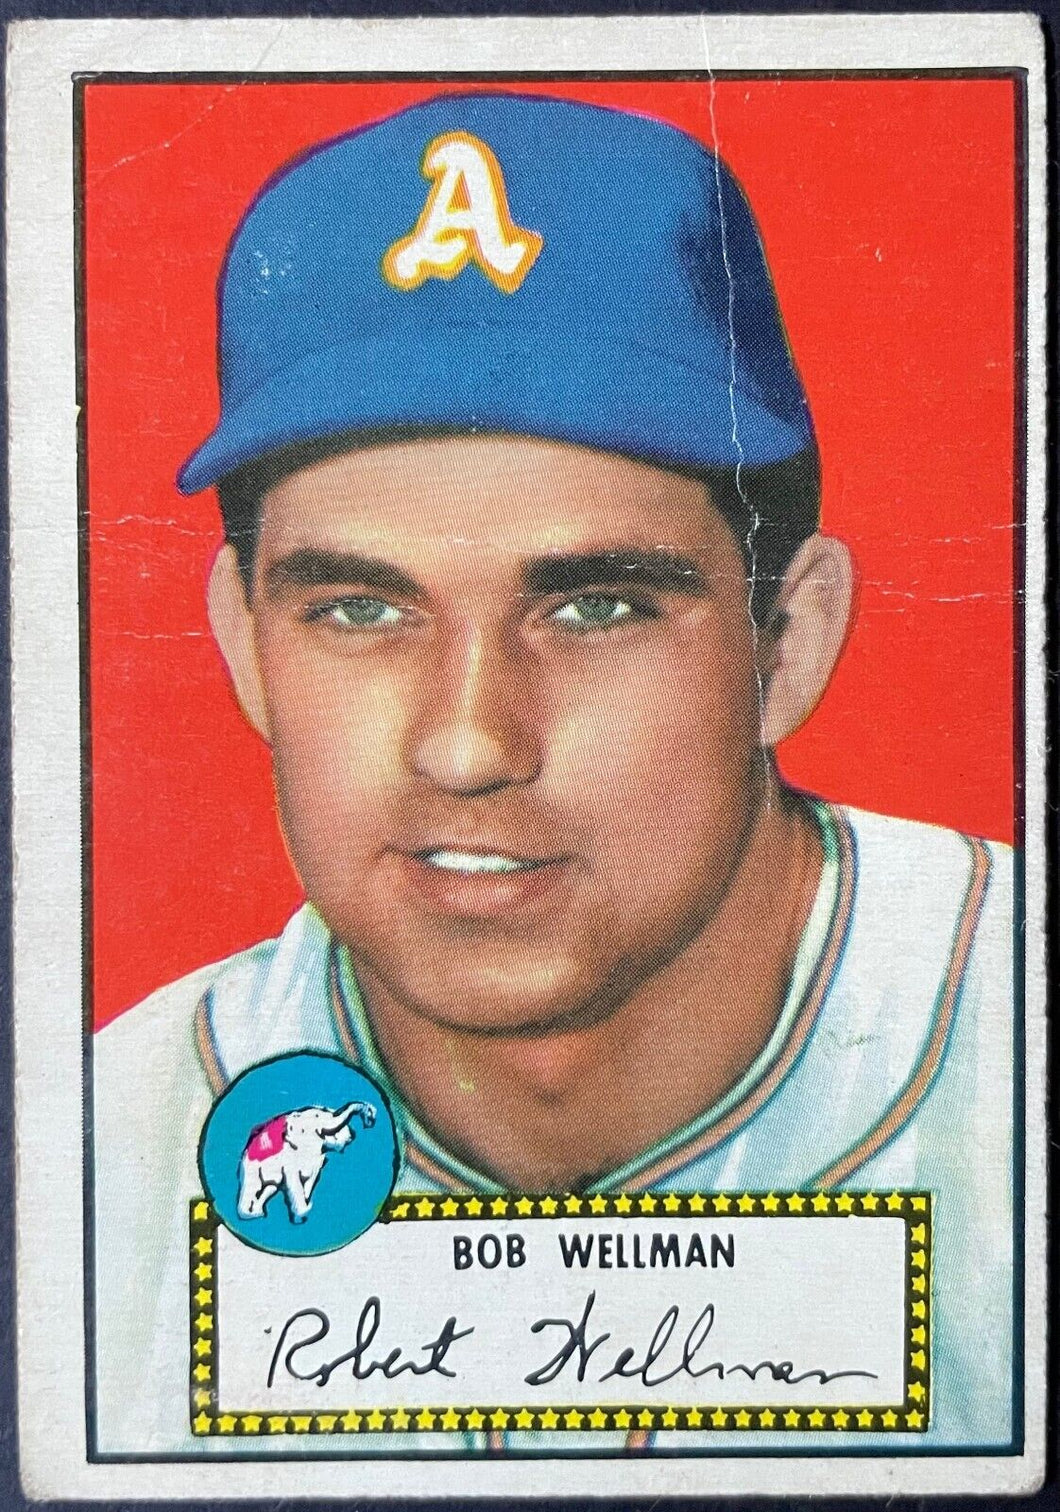 1952 Topps Baseball Bob Wellman #41 Philadelphia Athletics Vintage MLB Card